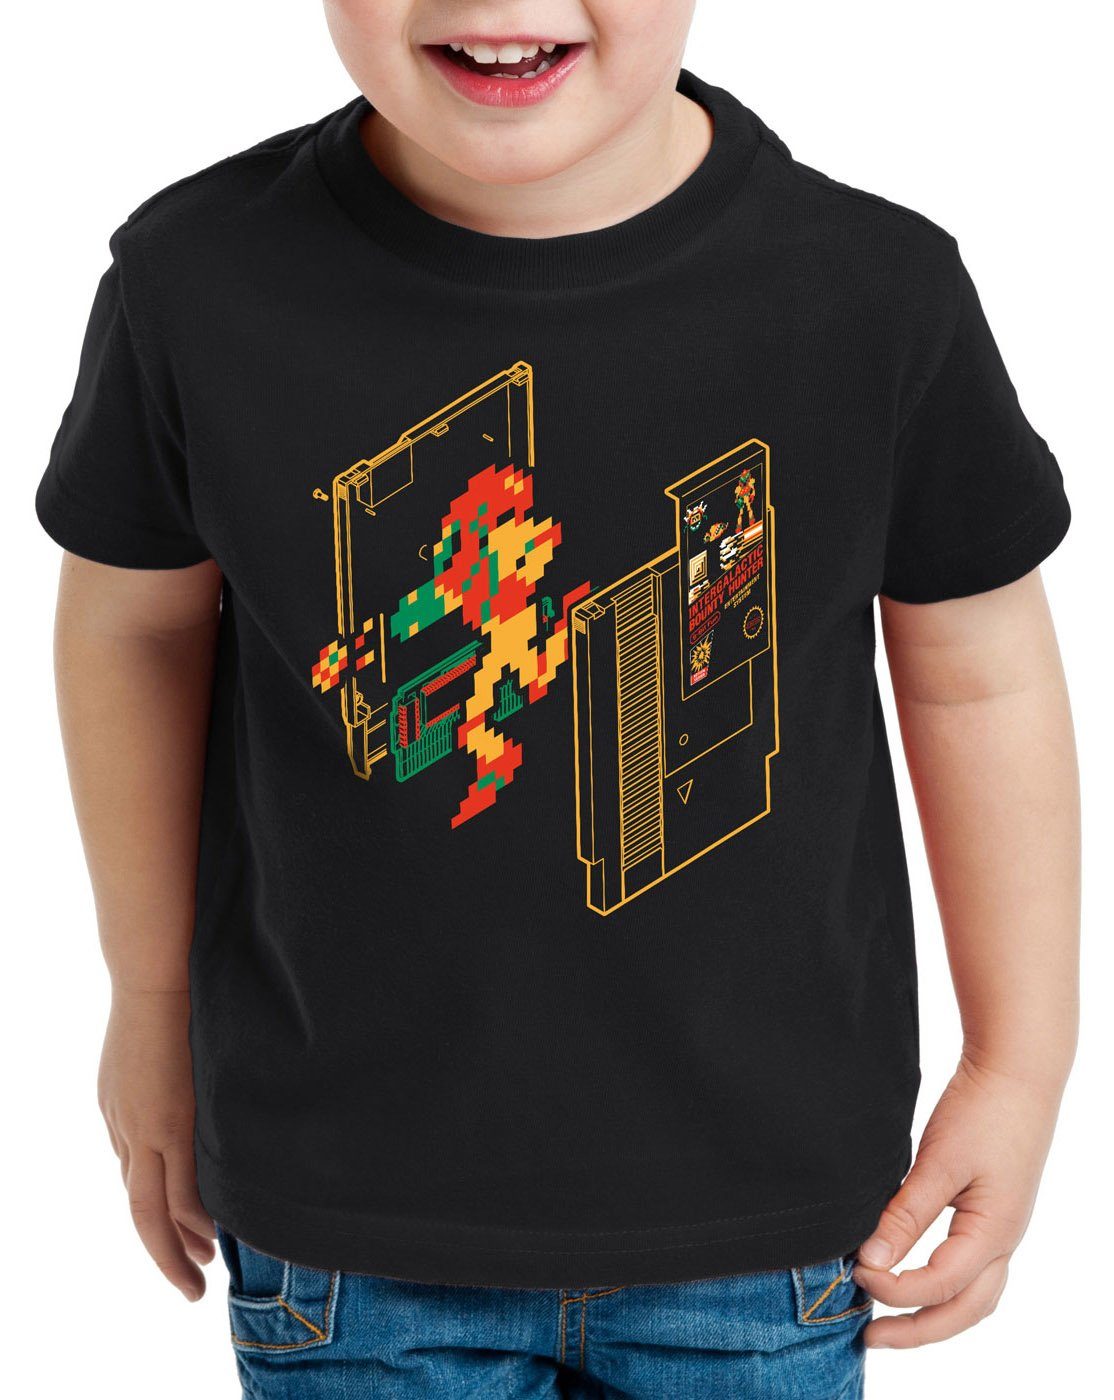 Print-Shirt classic switch 8-Bit gamer nes Samus Retro style3 Kinder T-Shirt